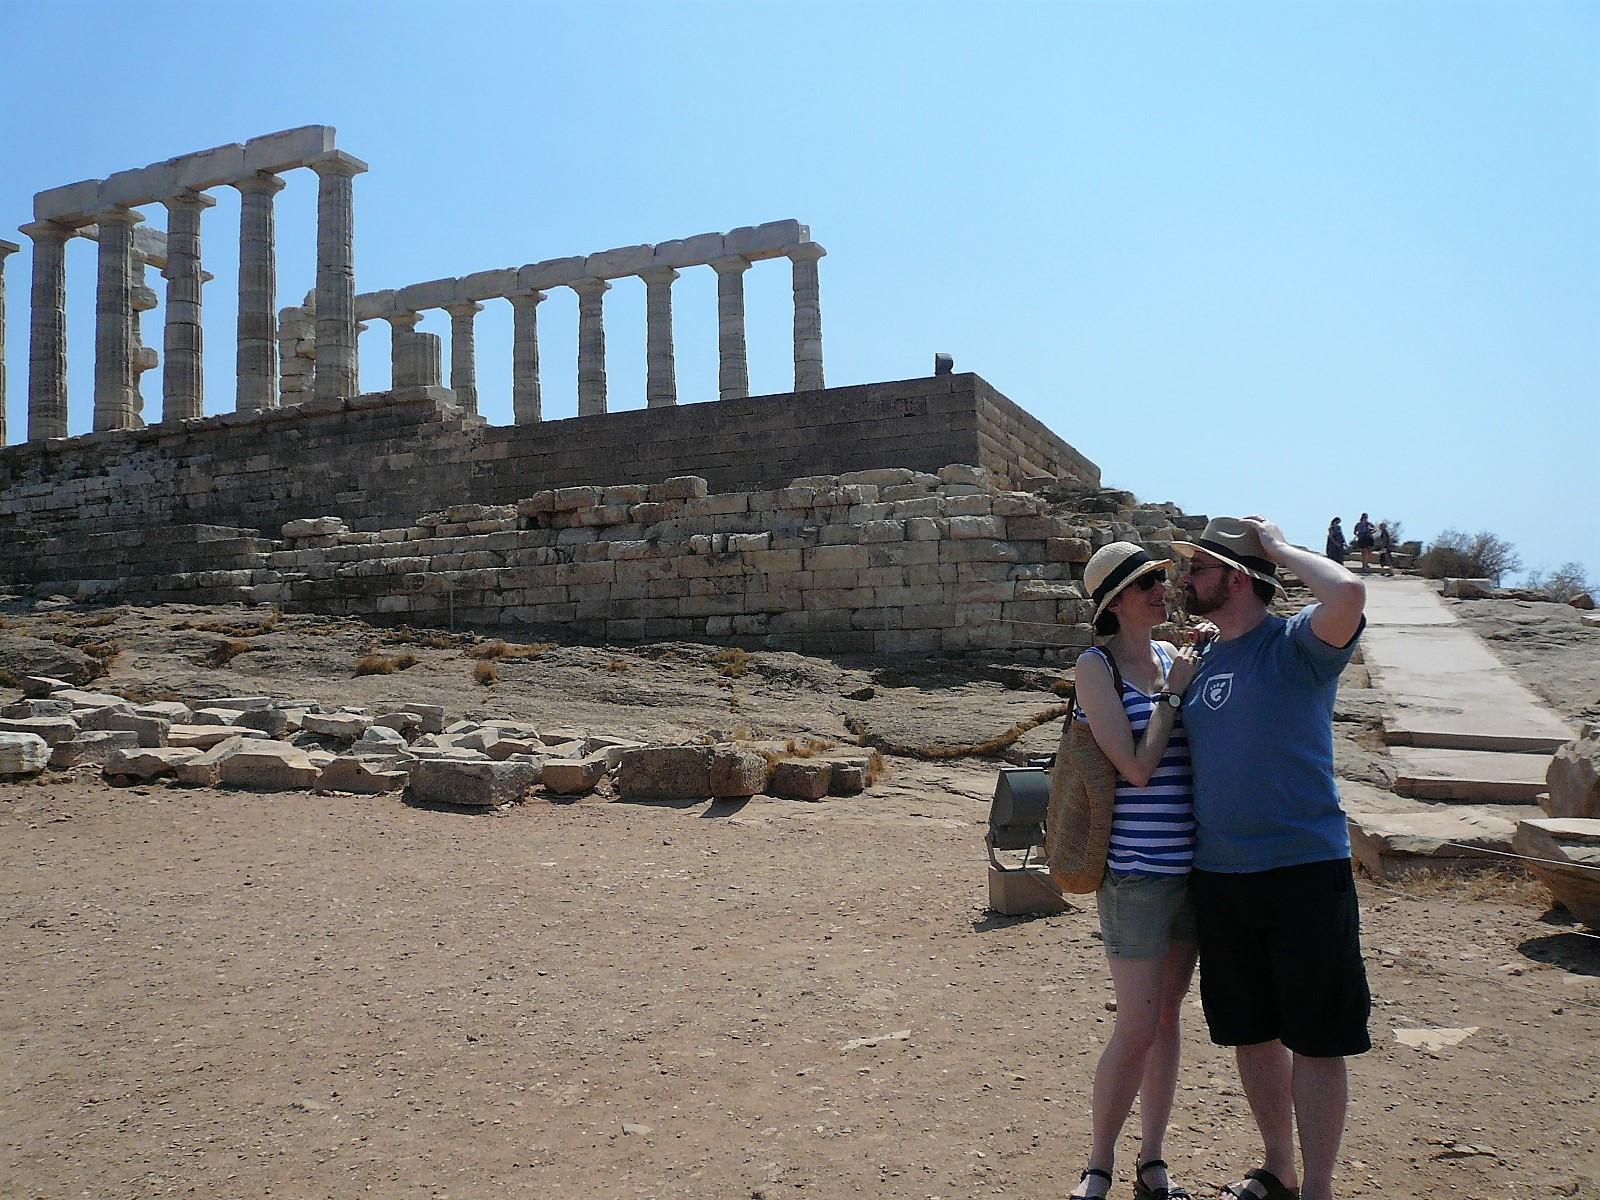 Christina & Me at the Temple of Poseidon